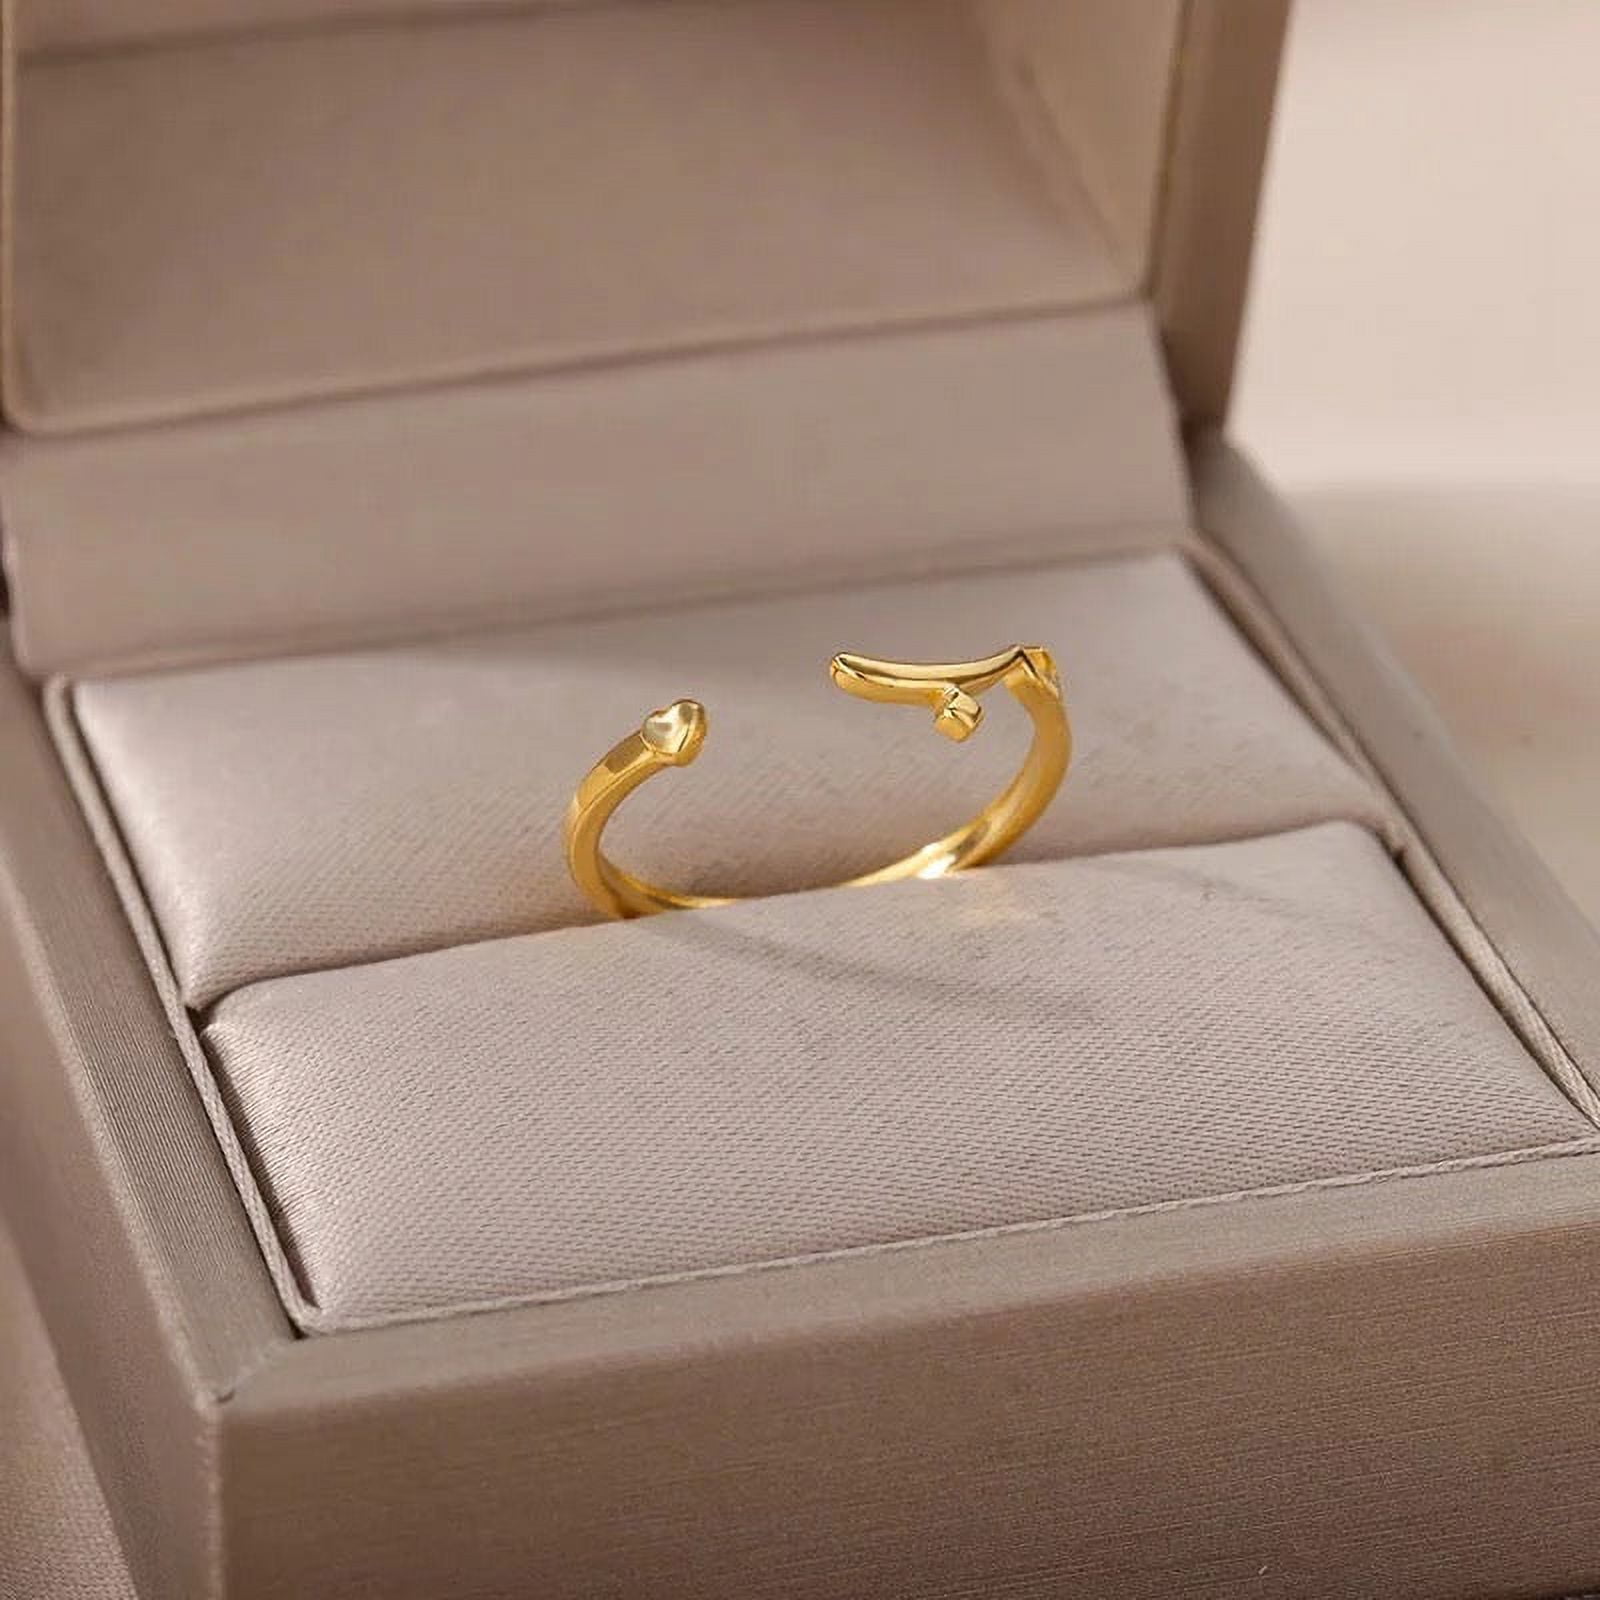 22k Yellow Gold Ring w/Arabic Mark--8.2g--Size 7.75 | eBay